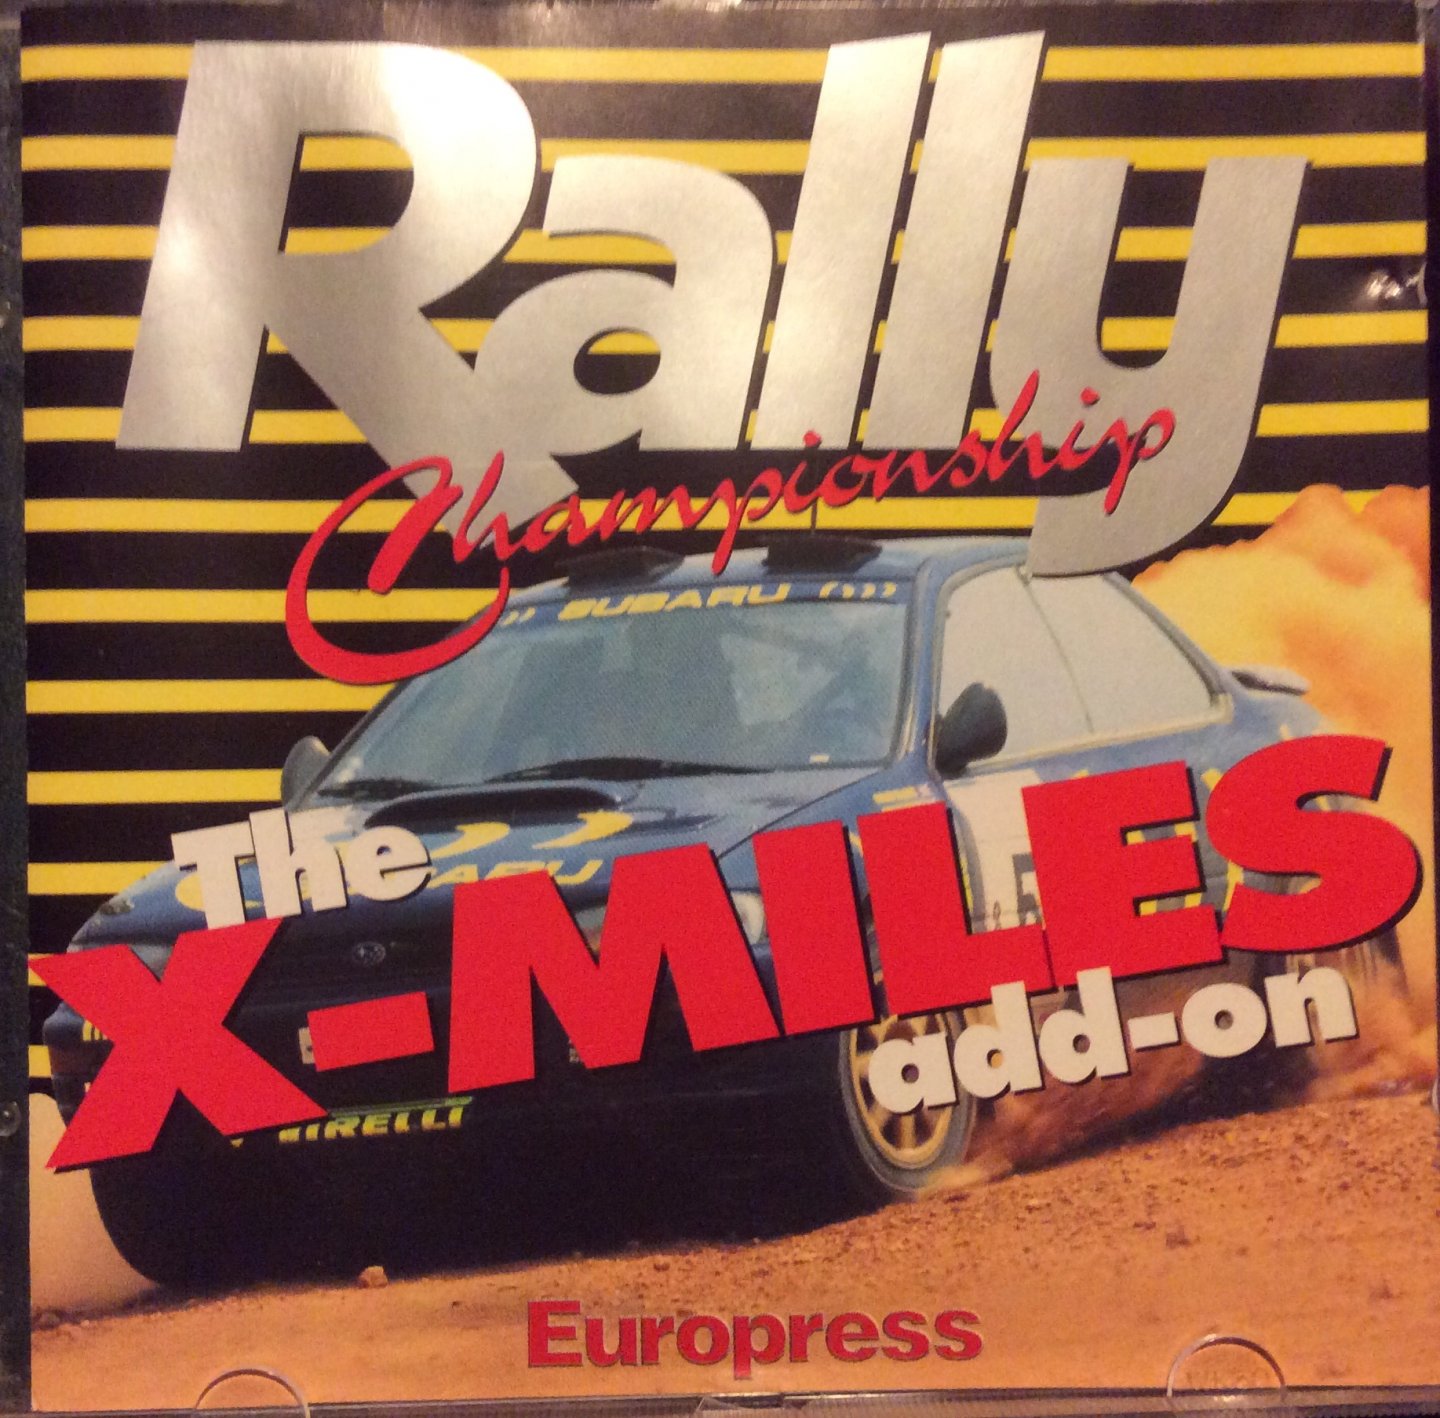 Europress - Rally Championship: The X-Miles add-on